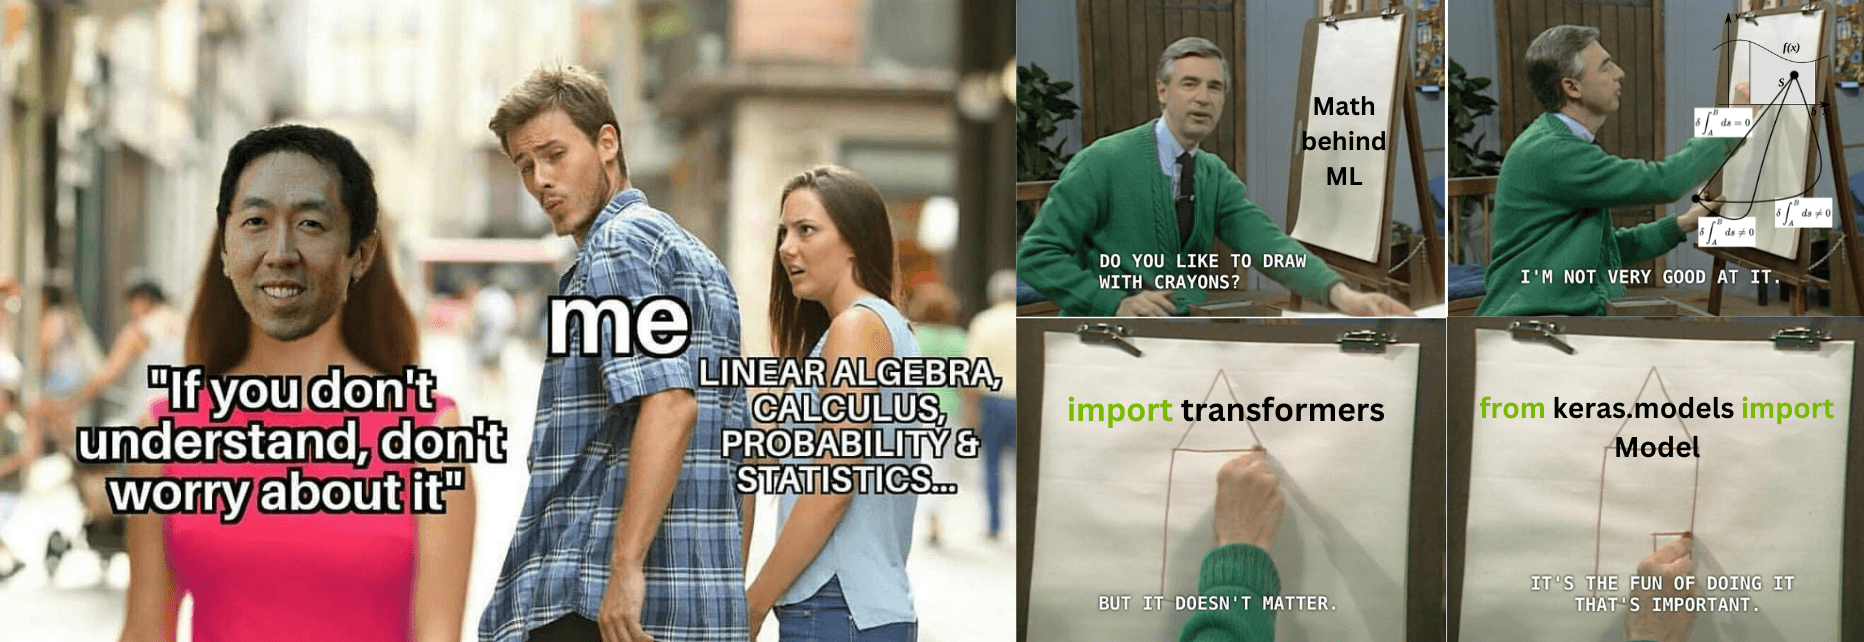 Maths for ML meme